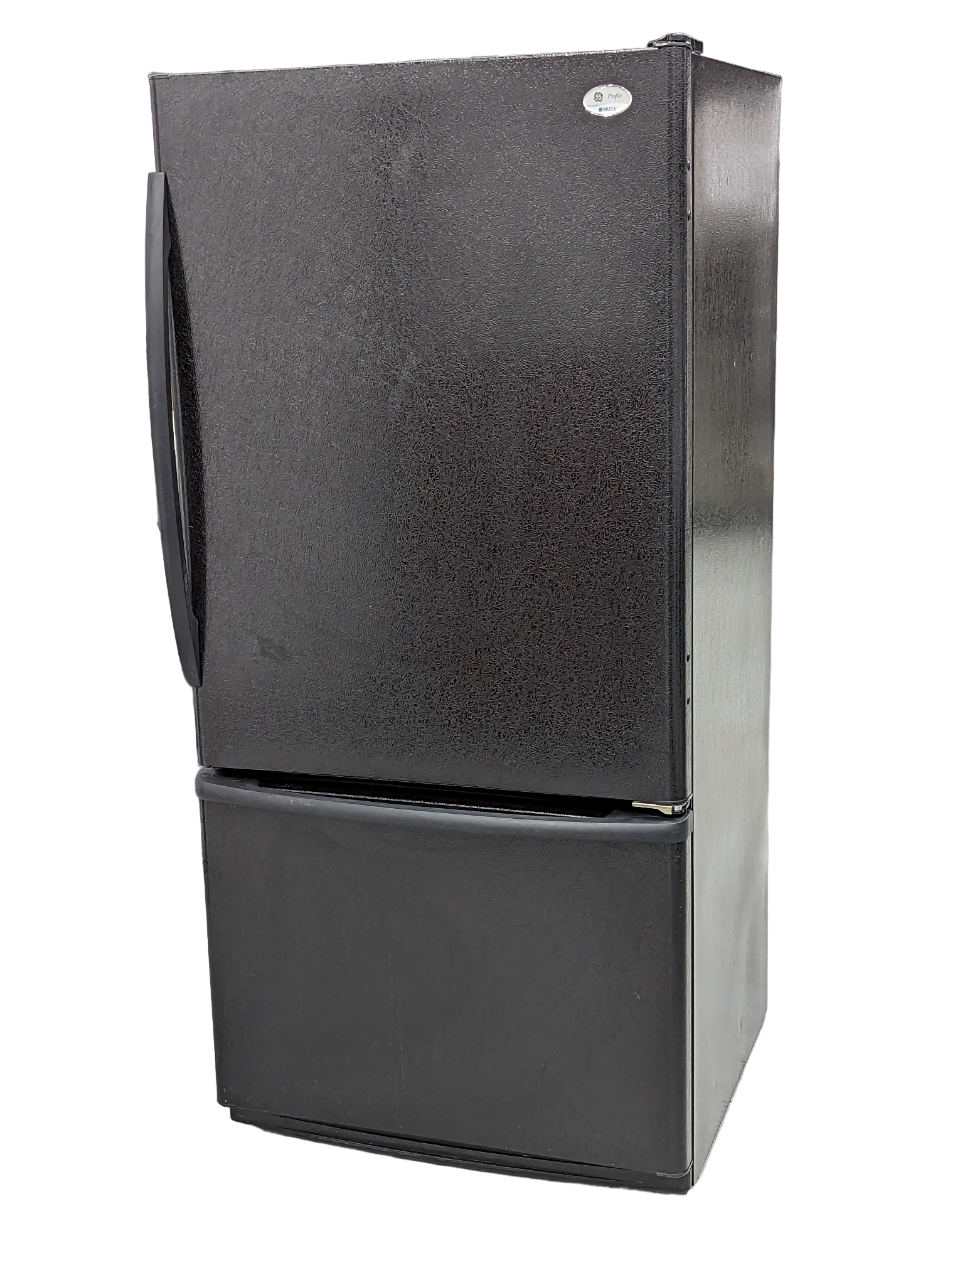 GE Refrigerator TD305708V